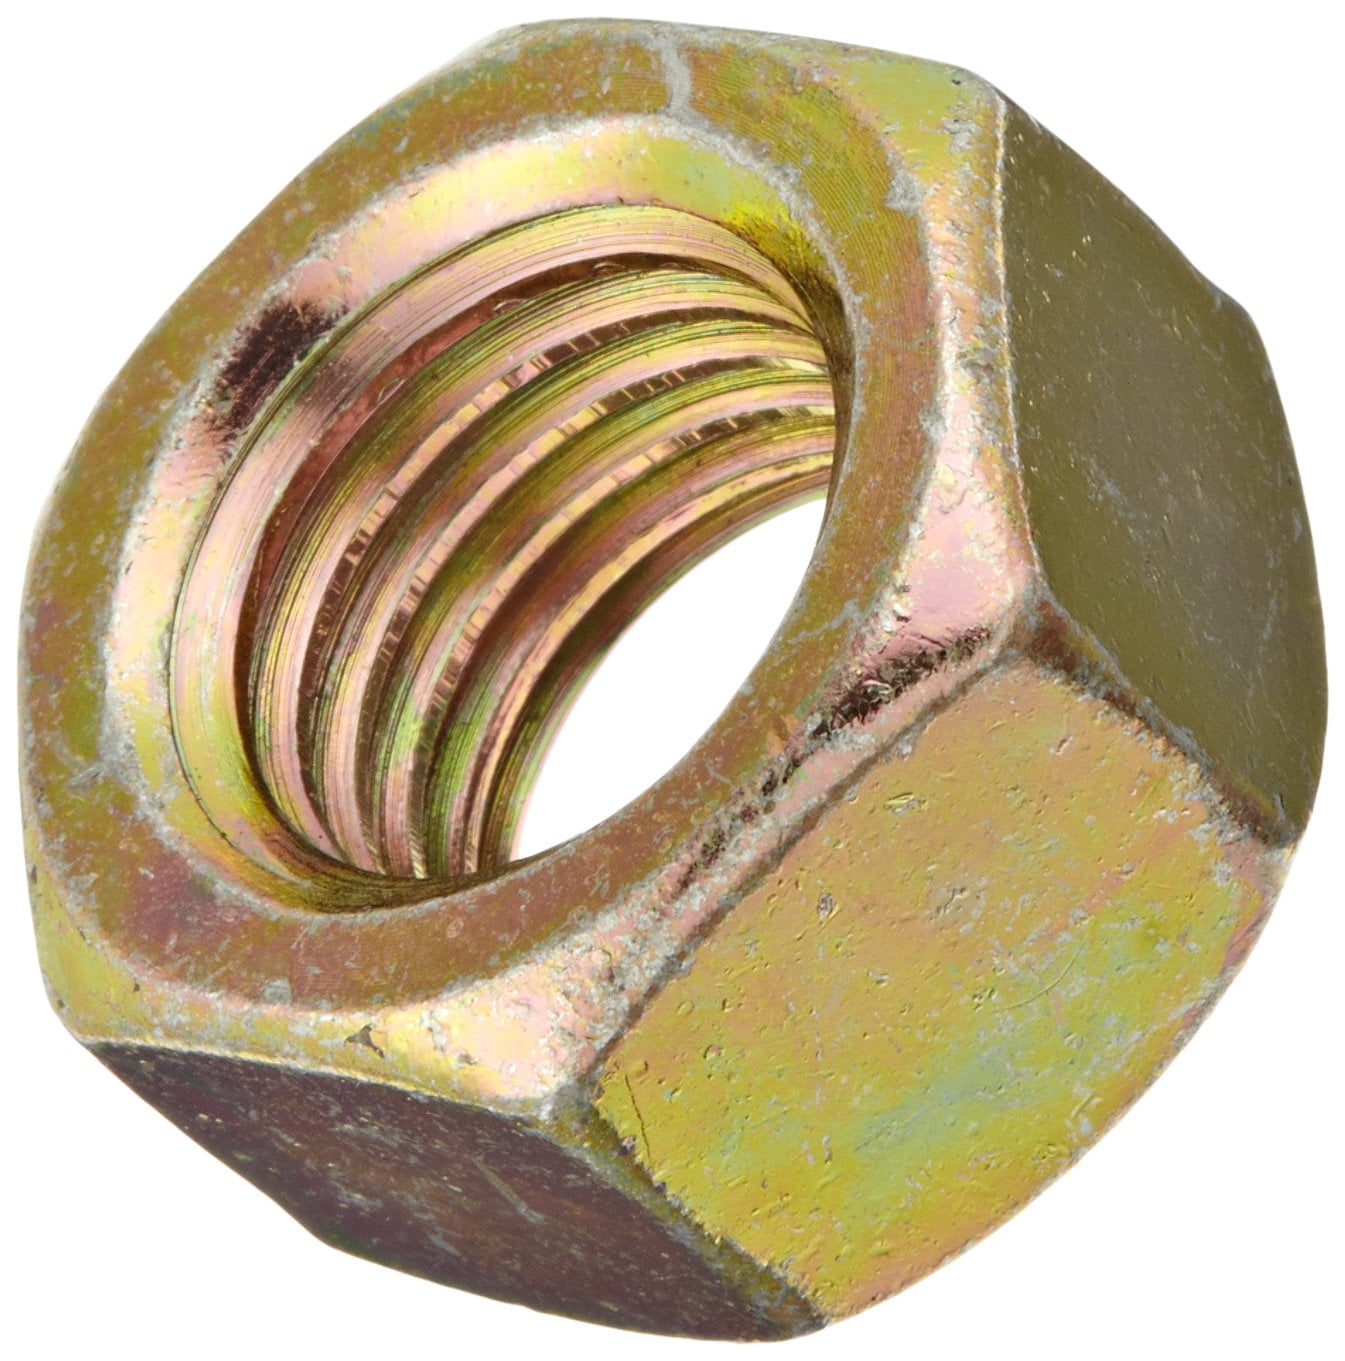 PCs 25 3/4-10 Grade 8 Nylon Insert Lock Replacement Threaded Nuts Assortment Set Nylock Yellow Zinc Plated